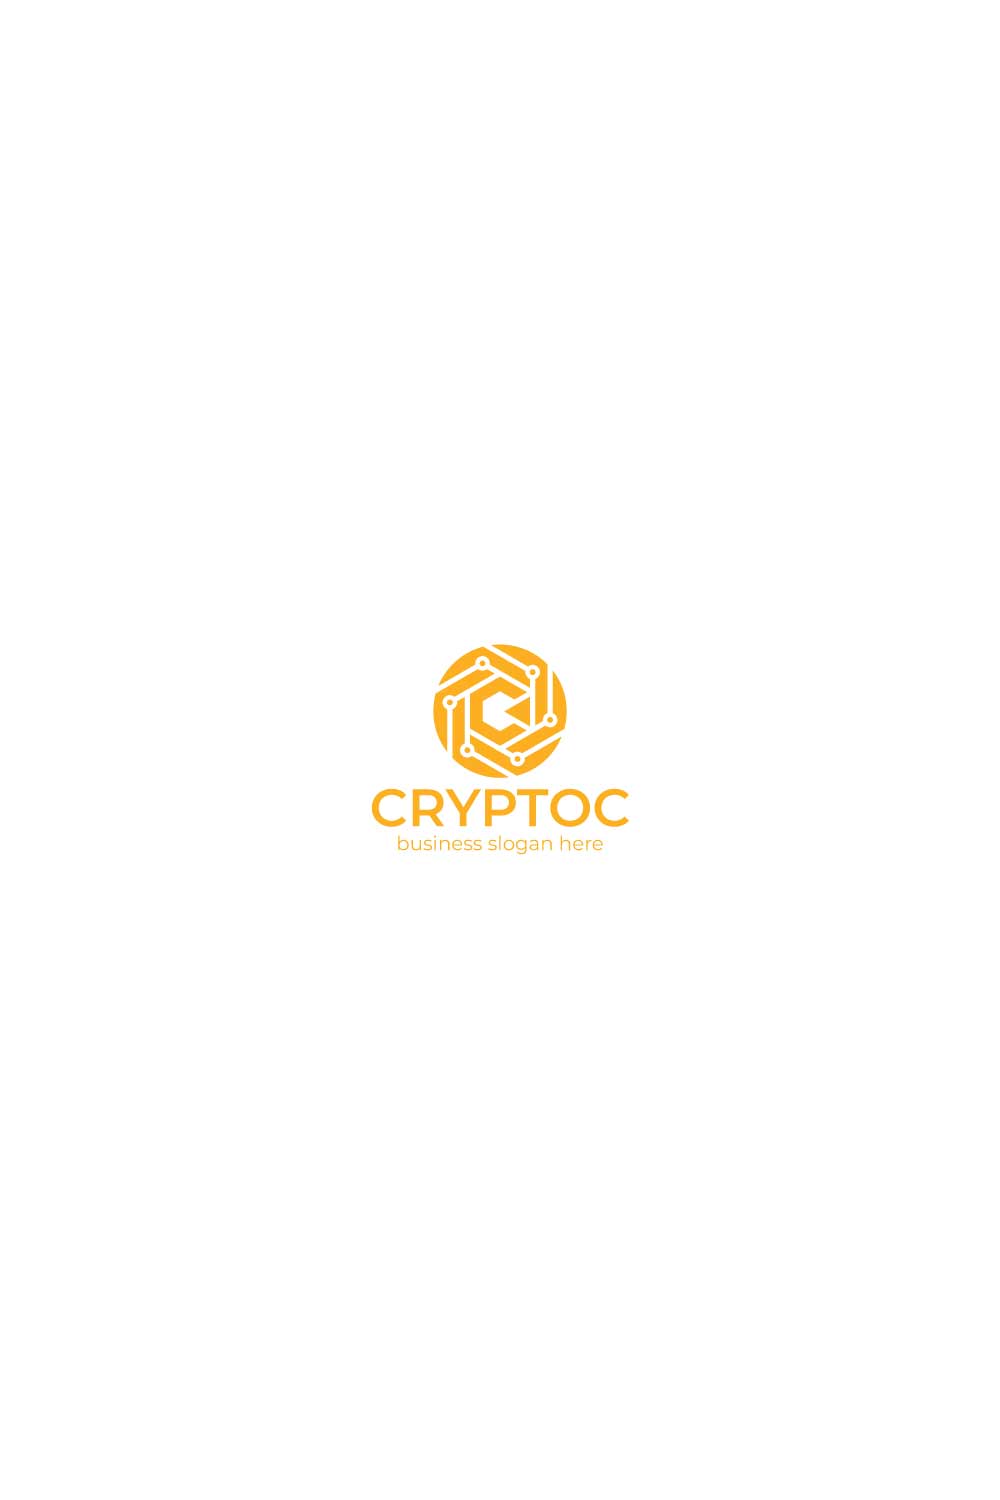 Letter C crypto coin logo design pinterest preview image.